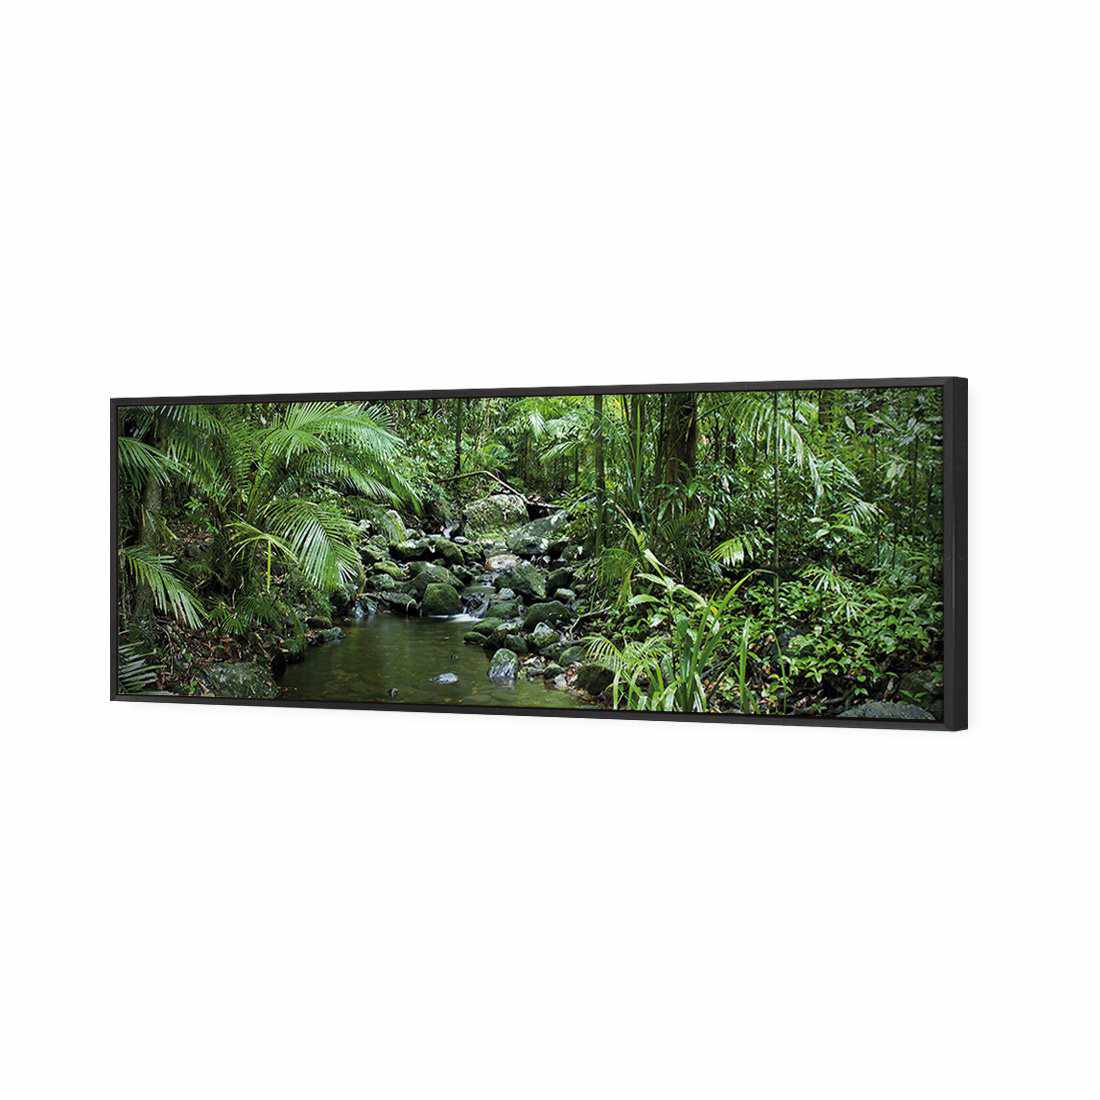 Mossman River In Daintree Rainforest Canvas Art-Canvas-Wall Art Designs-60x20cm-Canvas - Black Frame-Wall Art Designs